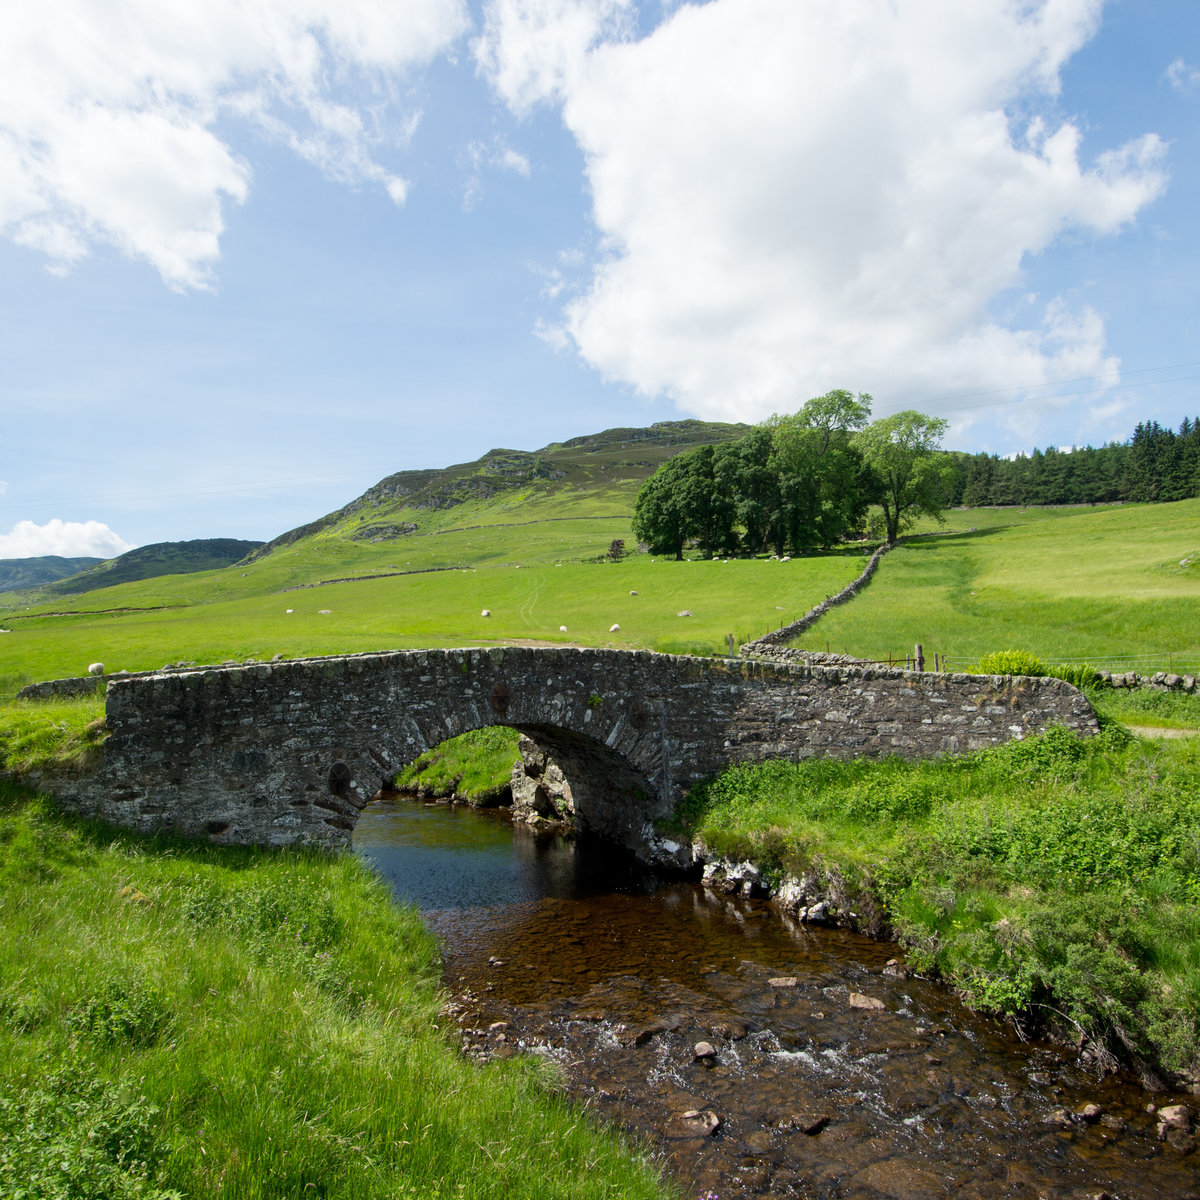 Scottish Tourism views – Rural scene